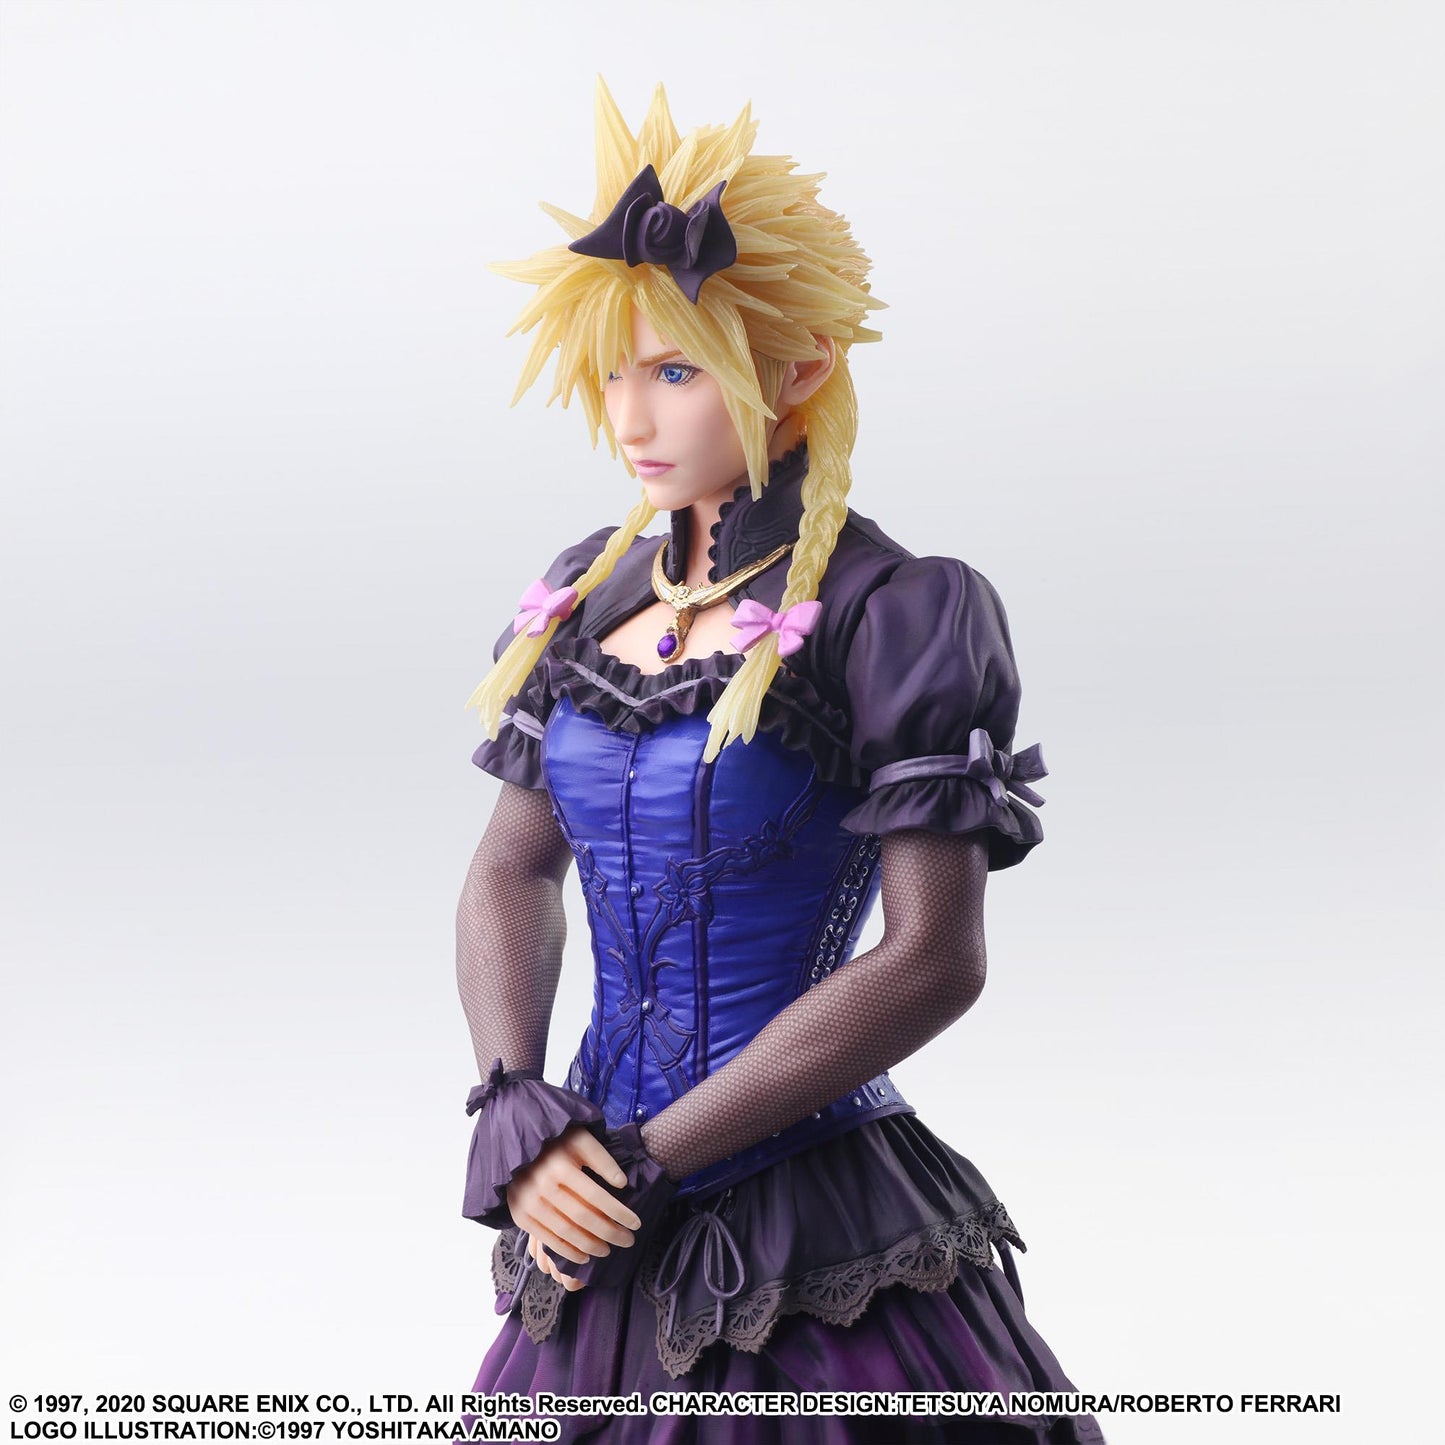 Final Fantasy VII Remake: Cloud Strife -Dress Ver.- Static Arts Figurine